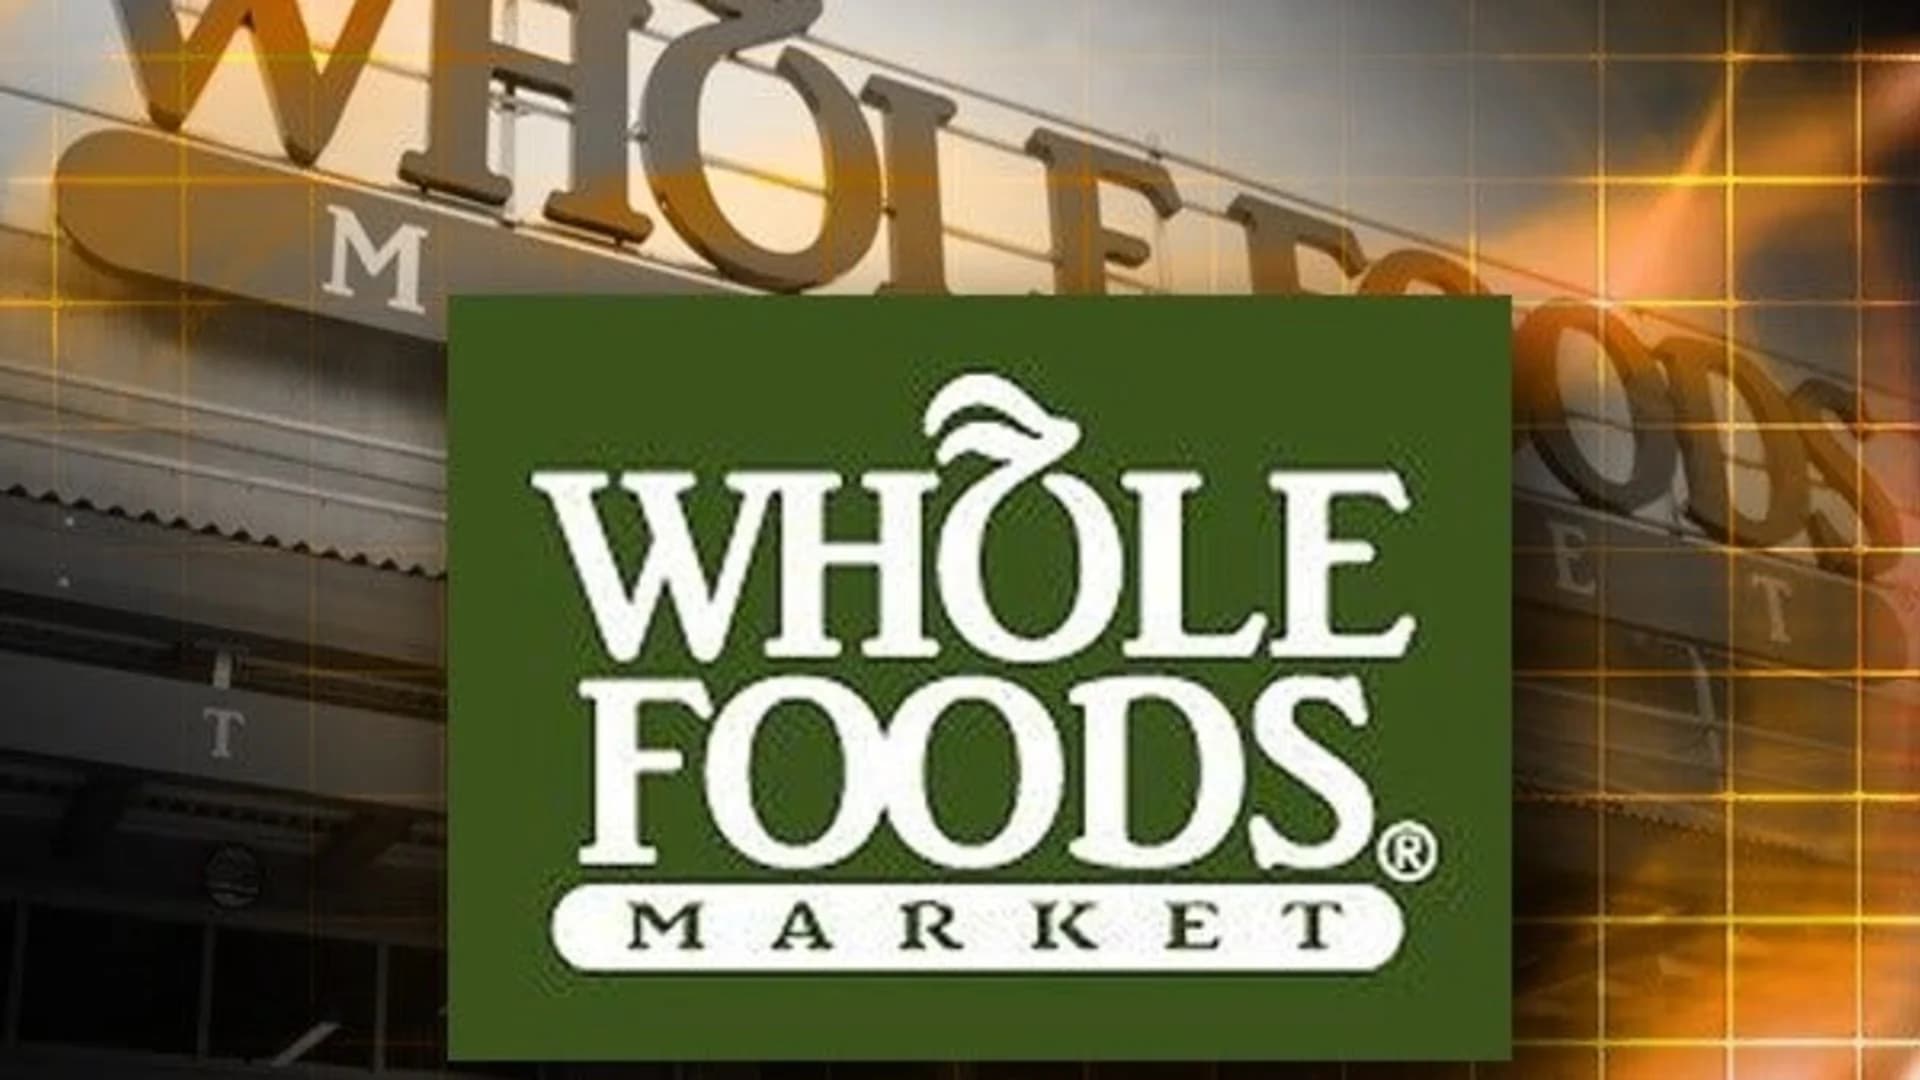 New Whole Foods Market opens in Weehawken